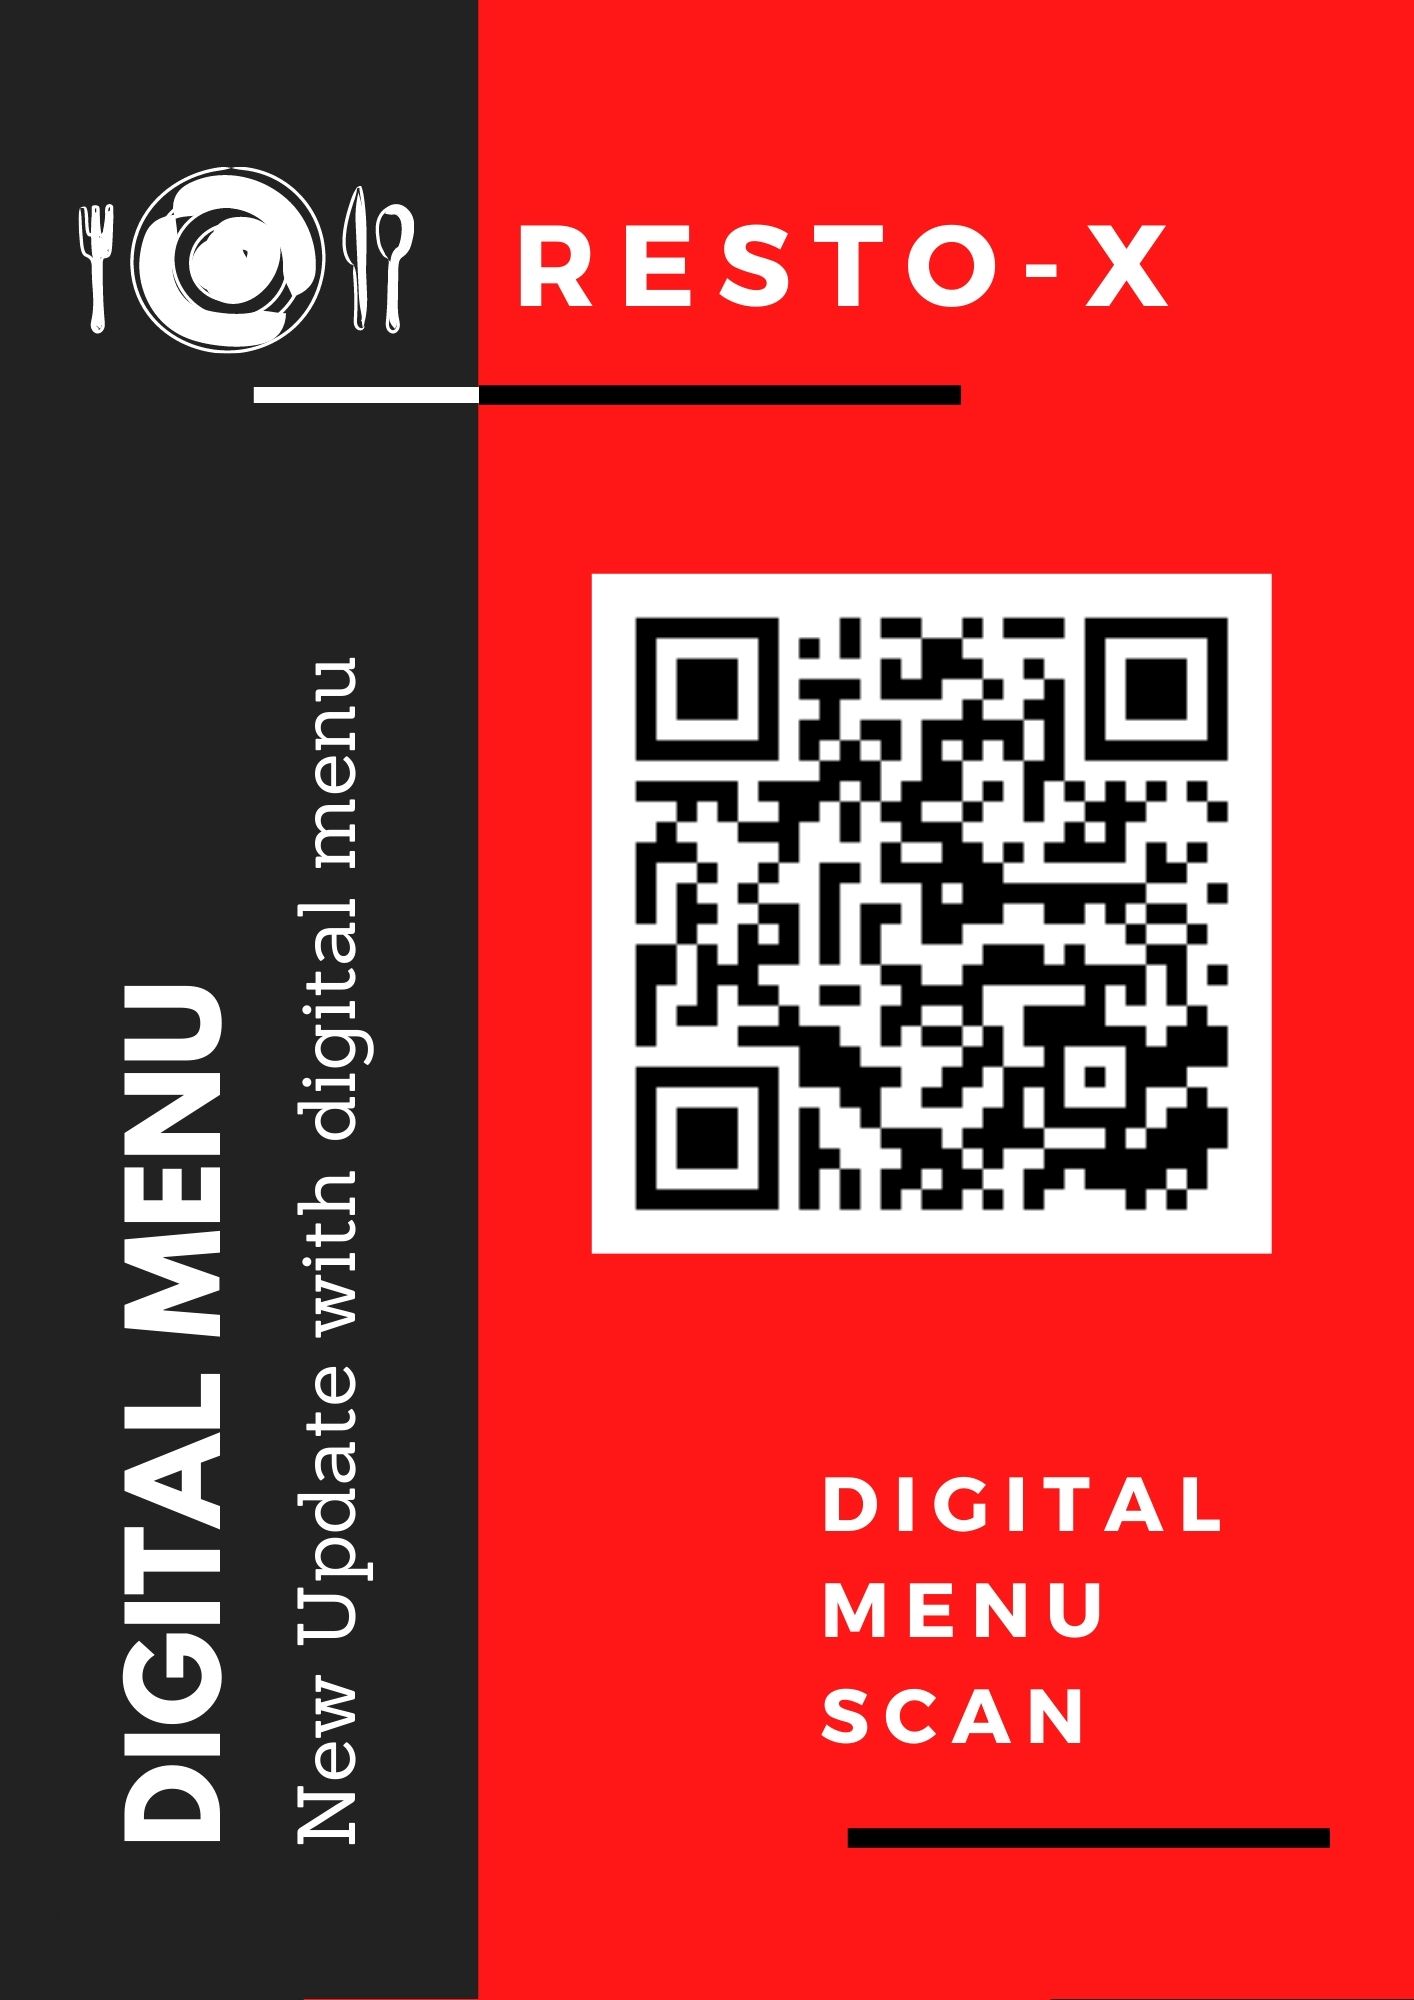 aplikasi restoran website restoran APK android restoran online